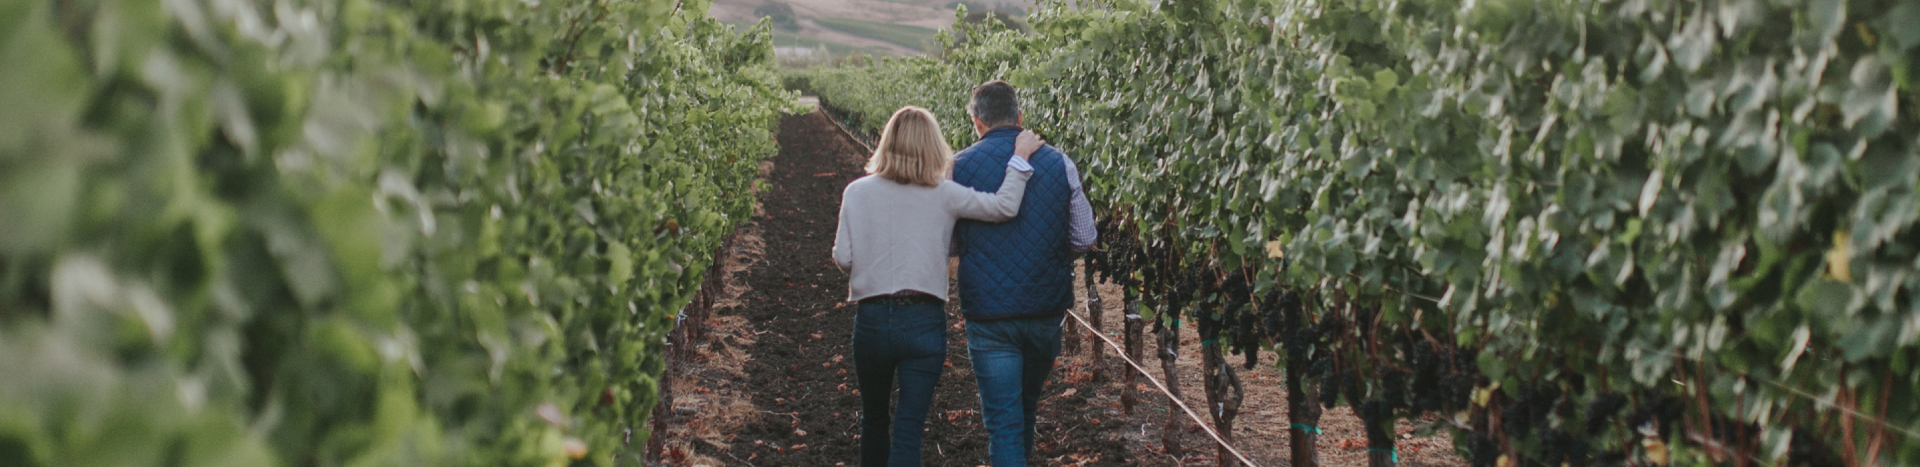 Sean and Nicole Minor walking through a vineyard